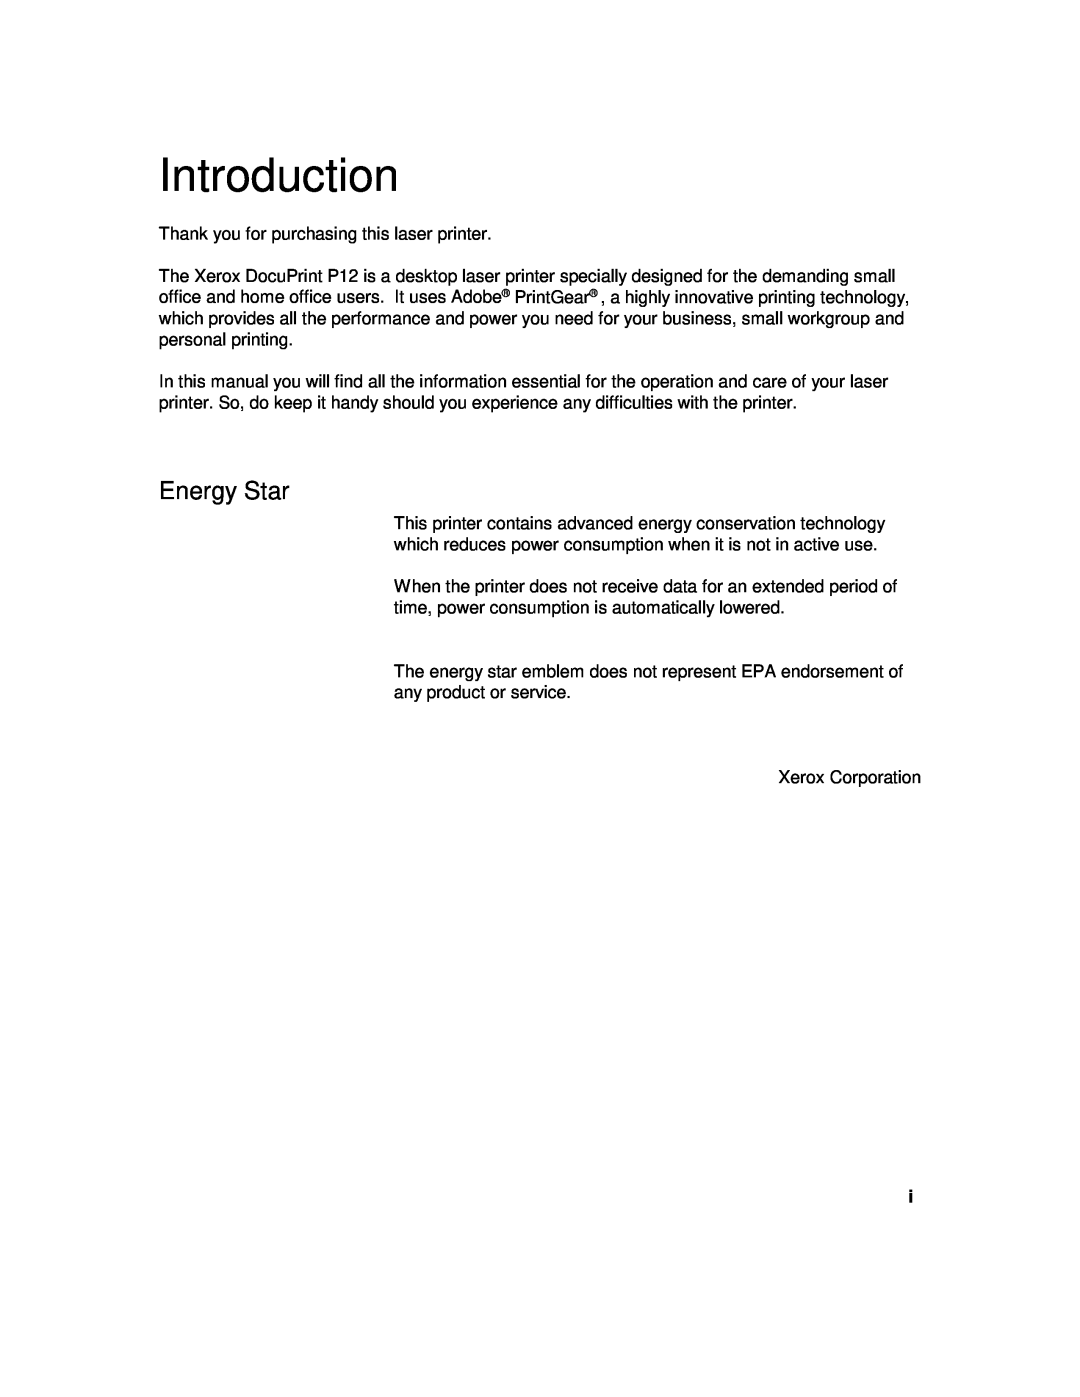 Xerox P12 manual Introduction, Energy Star 